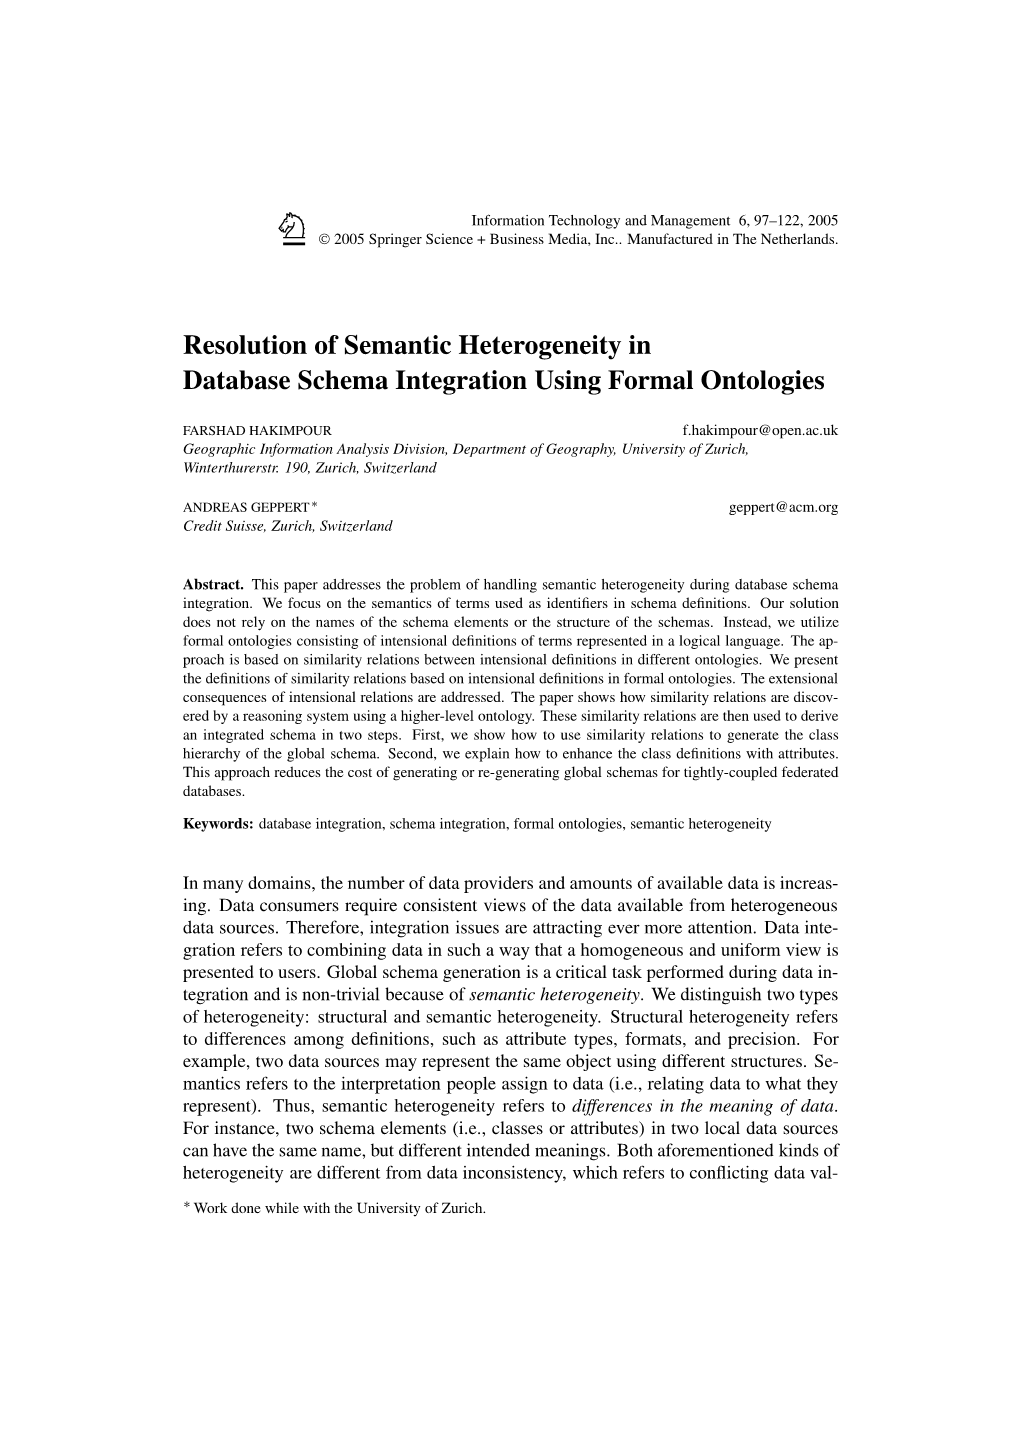 Resolution of Semantic Heterogeneity in Database Schema Integration Using Formal Ontologies